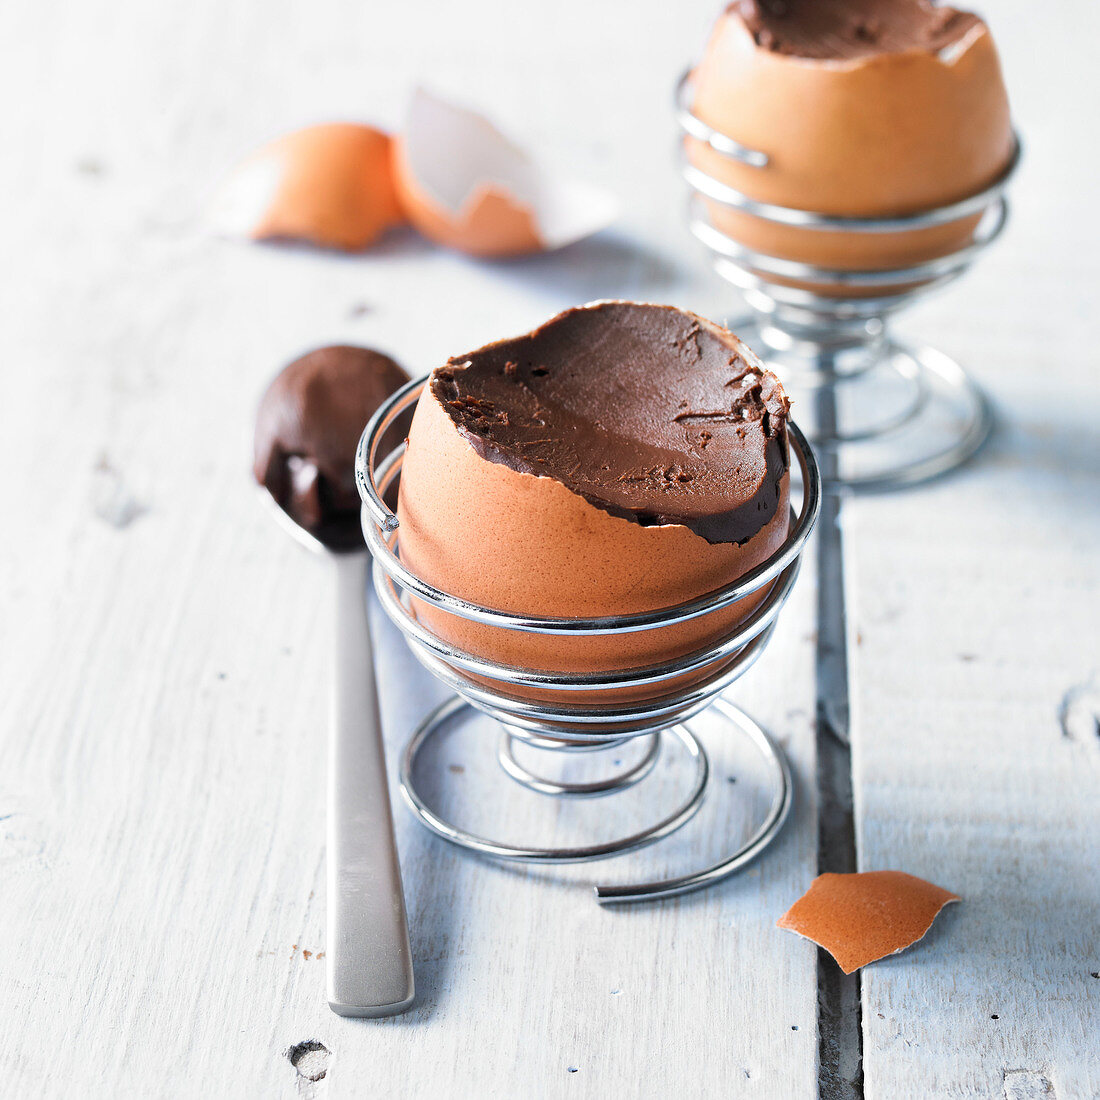 Chocolate Easter egg